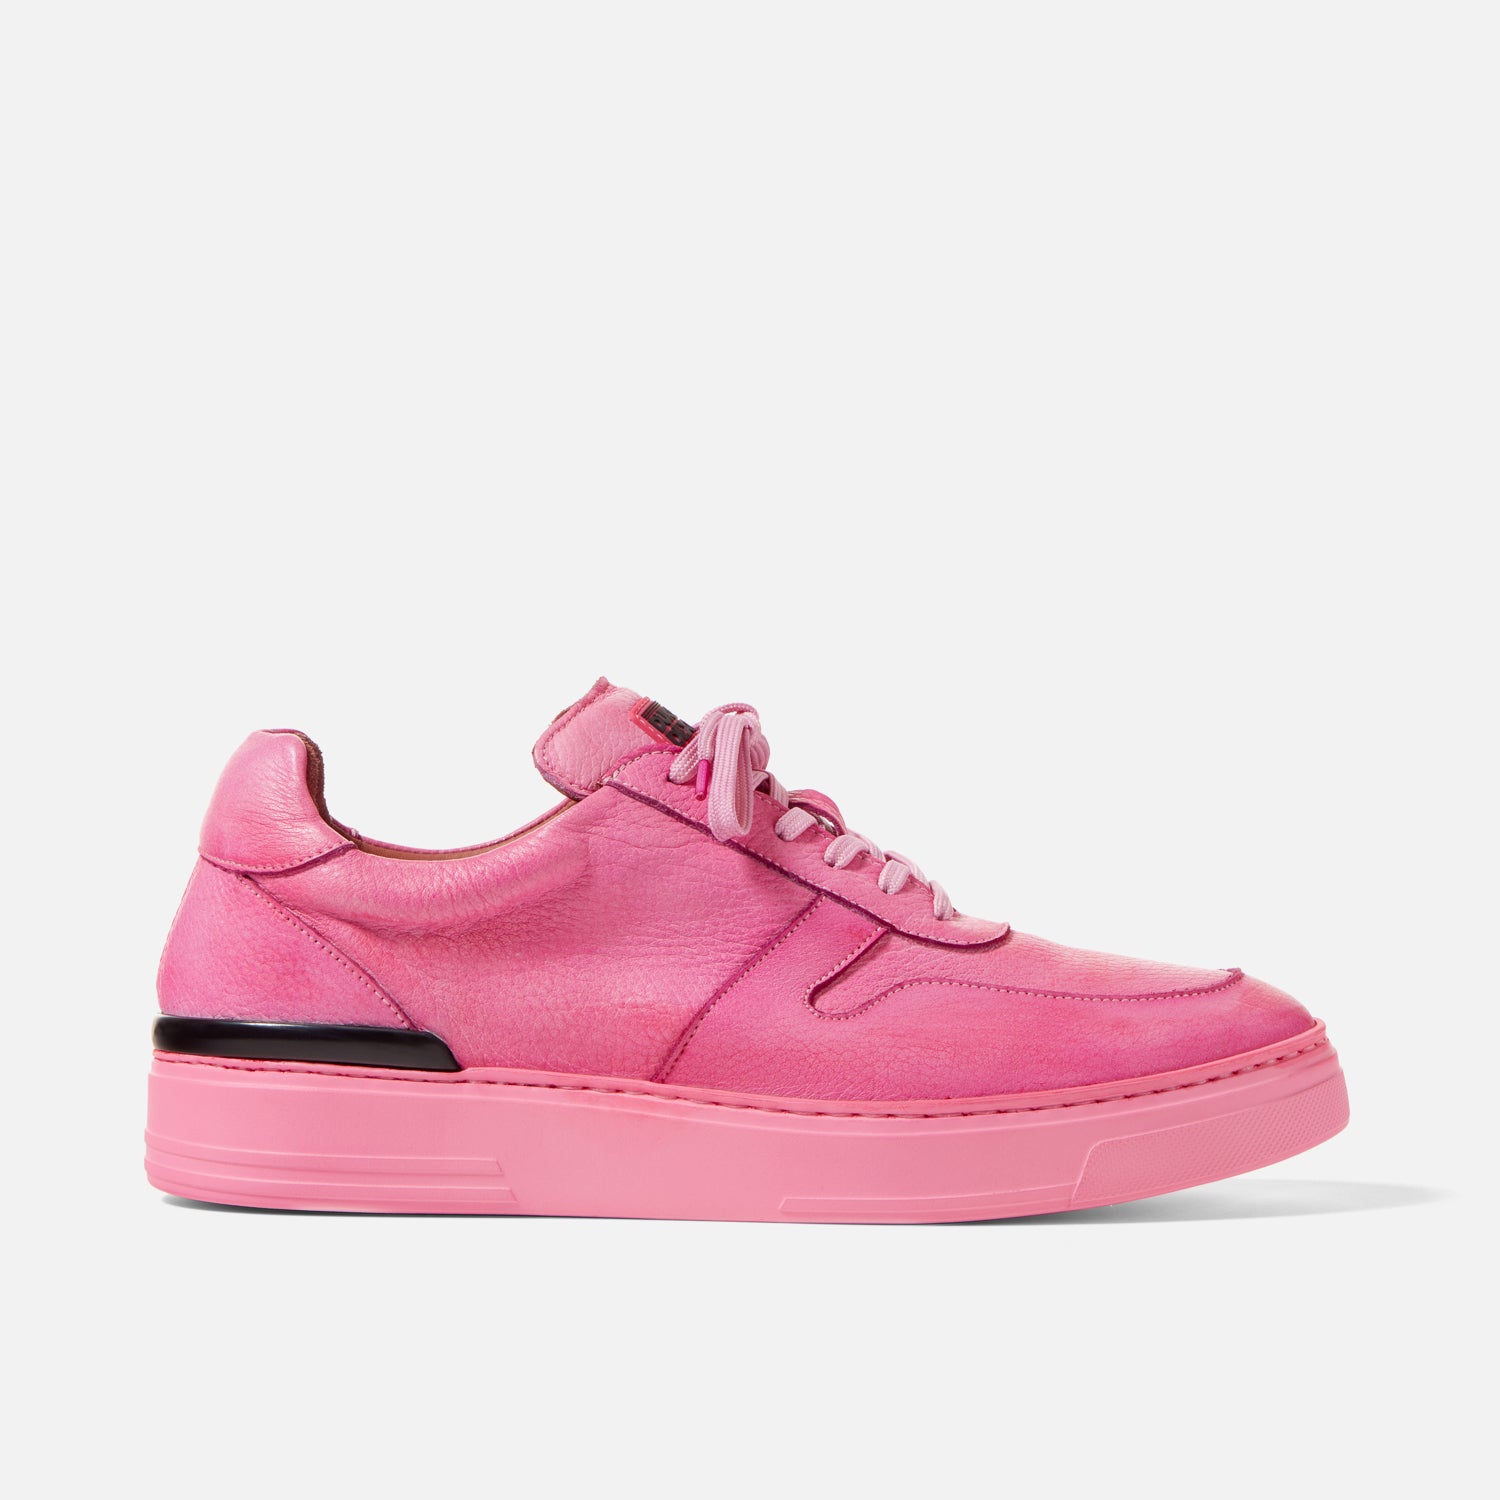 Duke + Dexter, Men's RITCHIE Custom Pink Sneaker, Size 8